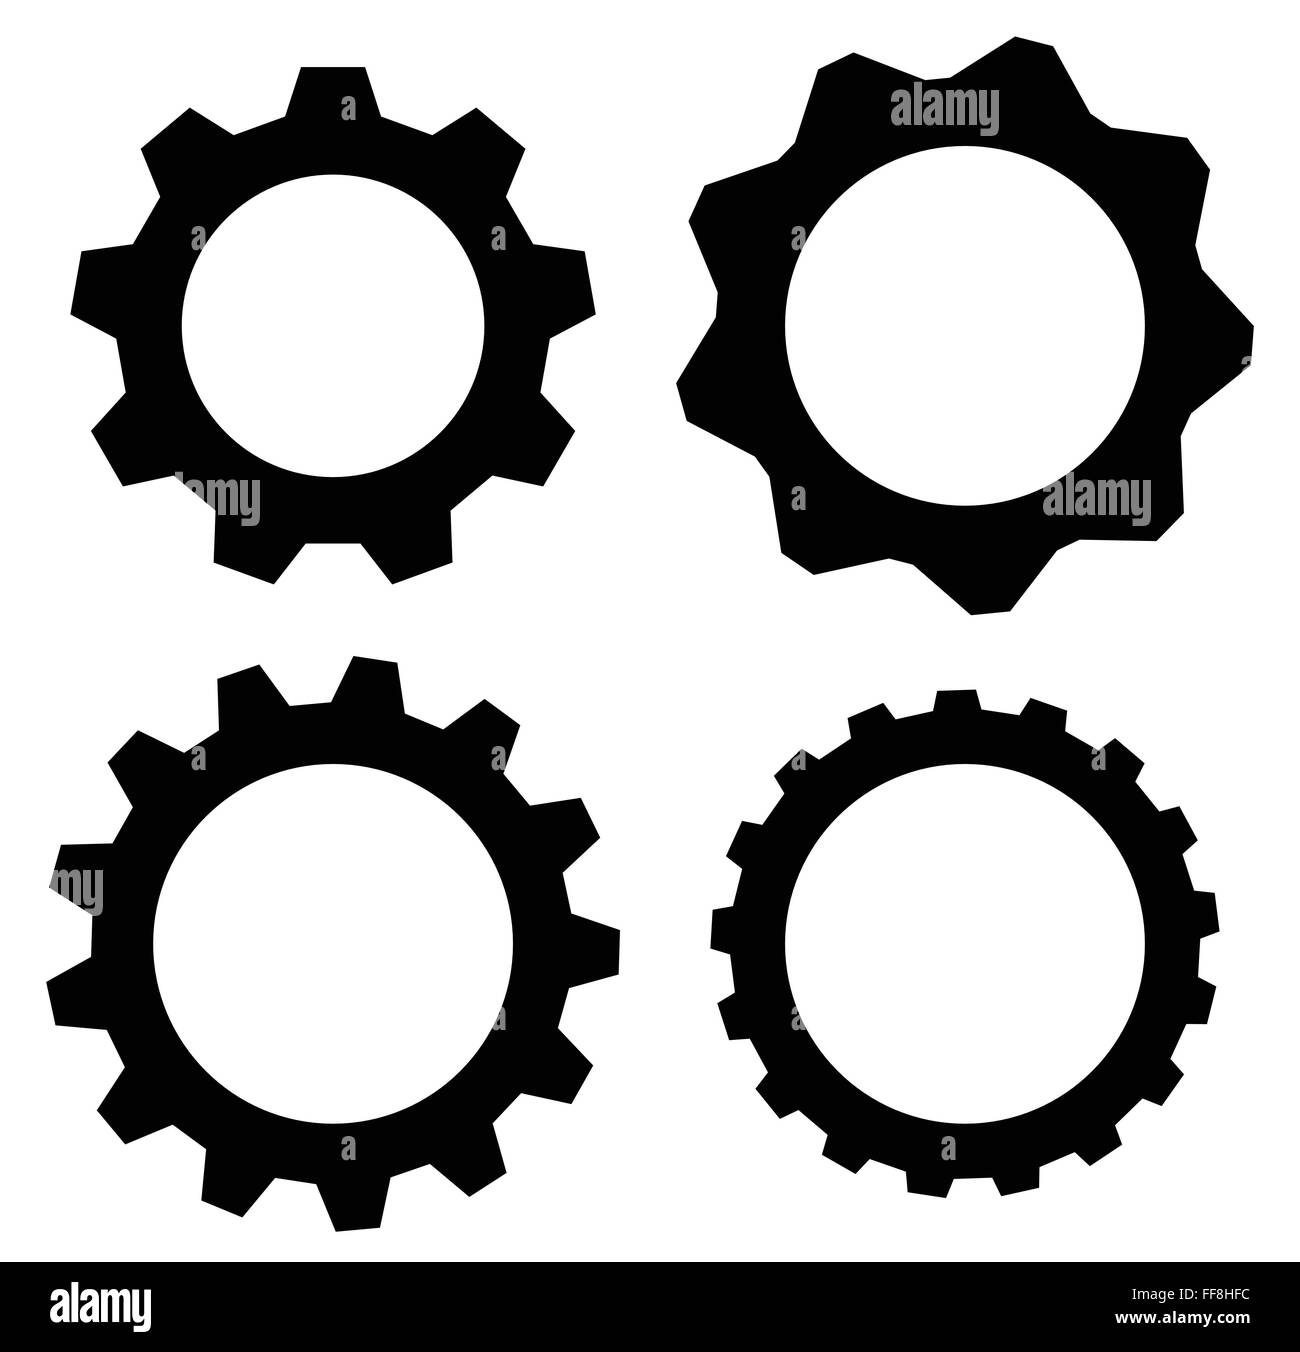 Gearwheel, cogwheel, gear shapes. mechanics, industry or production, development concepts Stock Vector